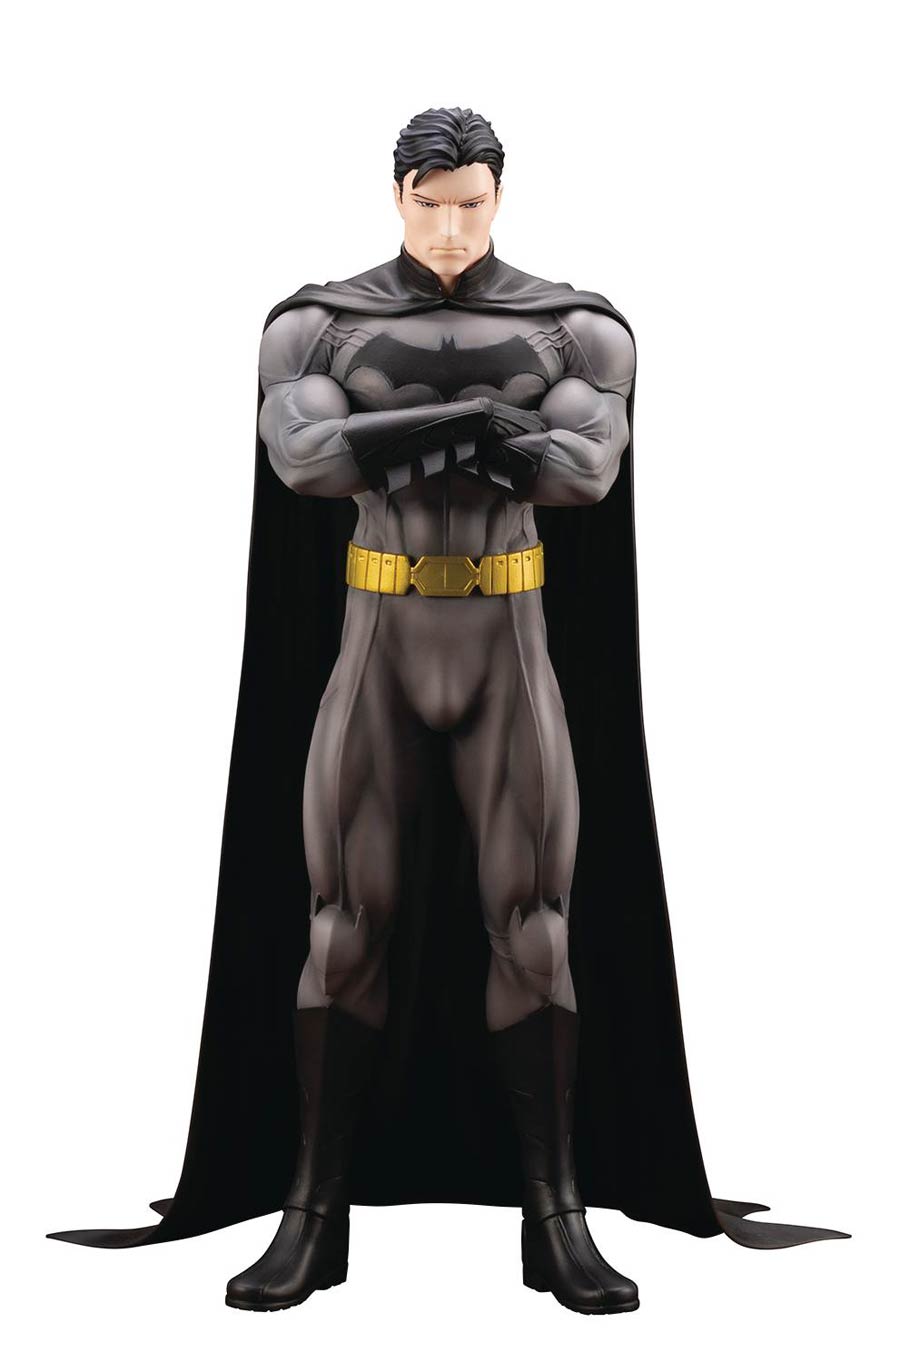 DC Comics Batman Ikemen Statue With Bonus Part